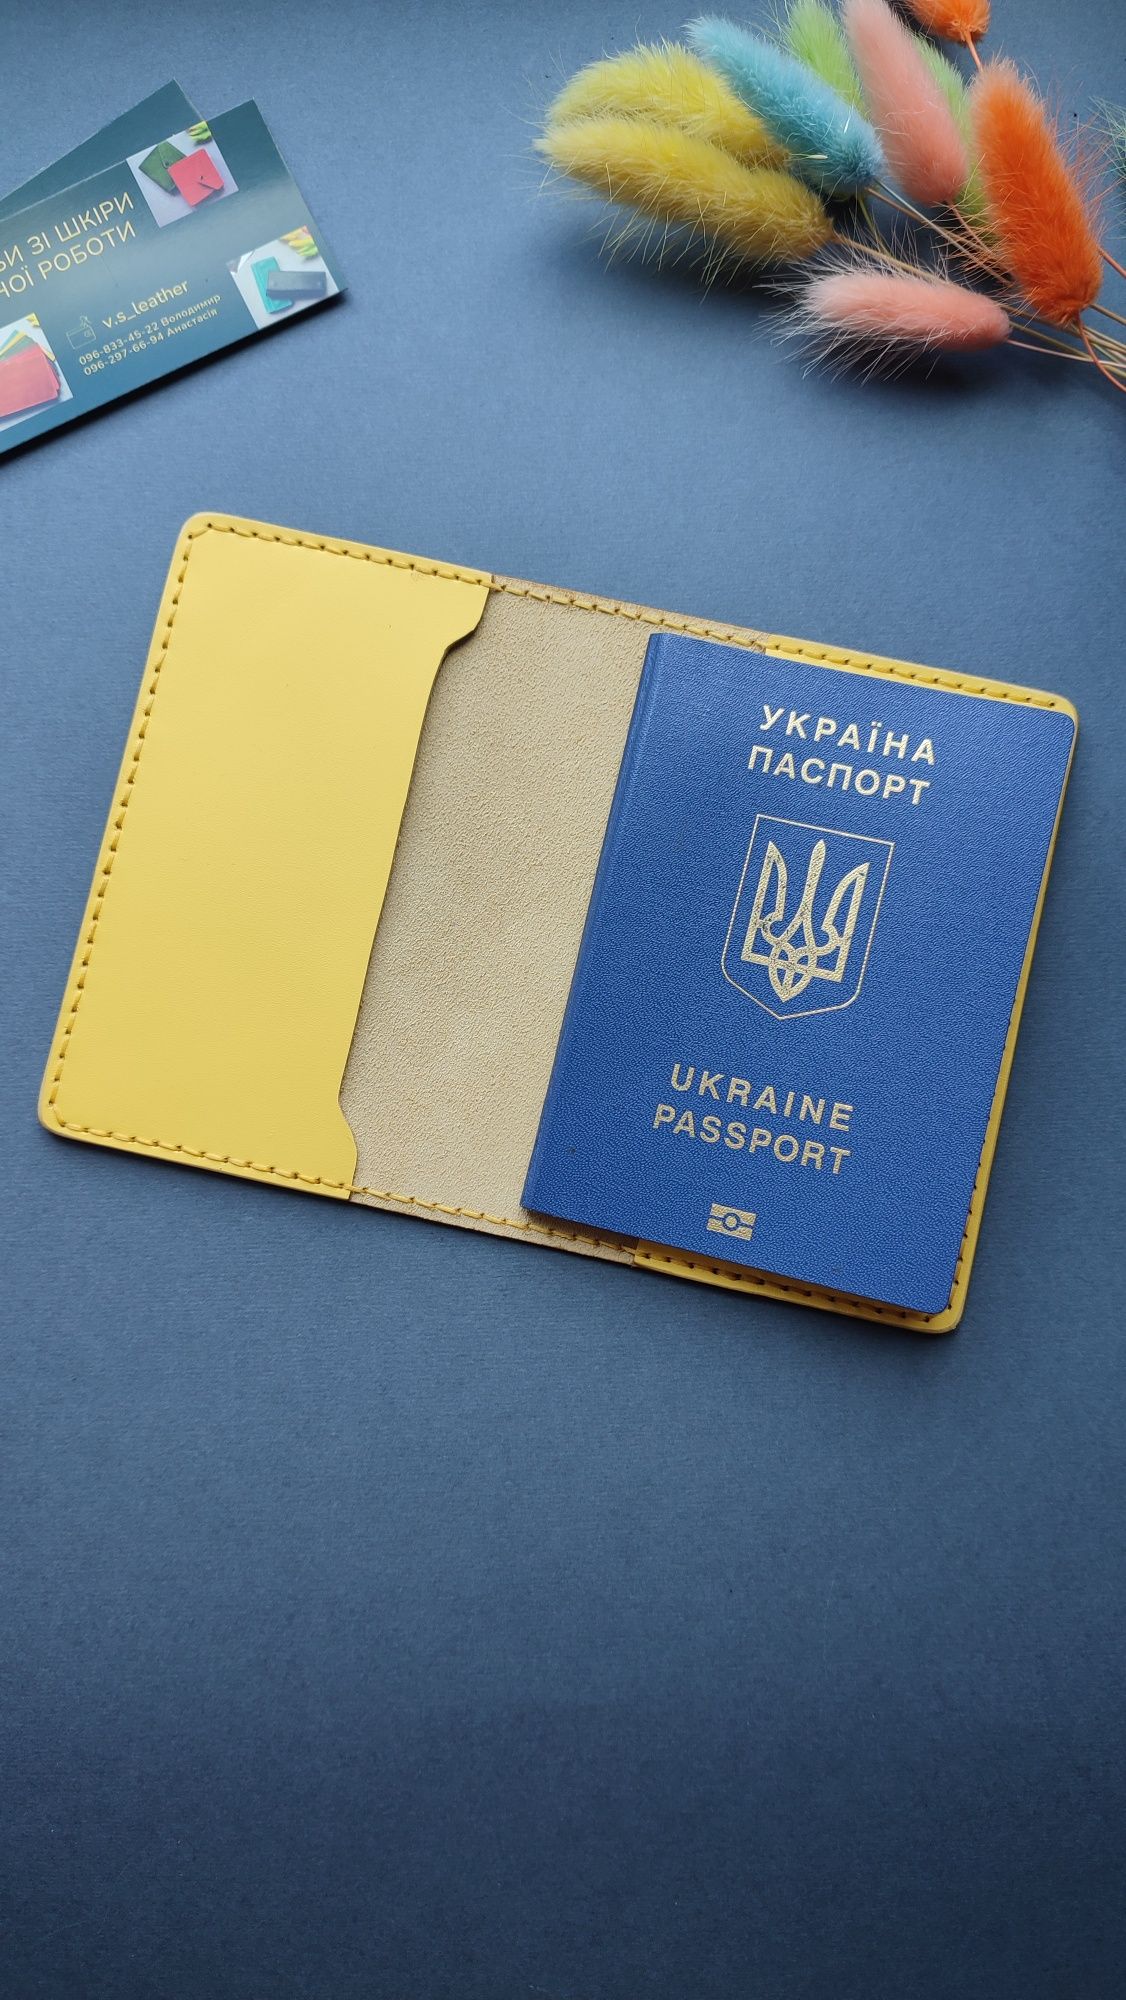 Обкладинка на паспорт, обложка на паспорт, обложка для документов